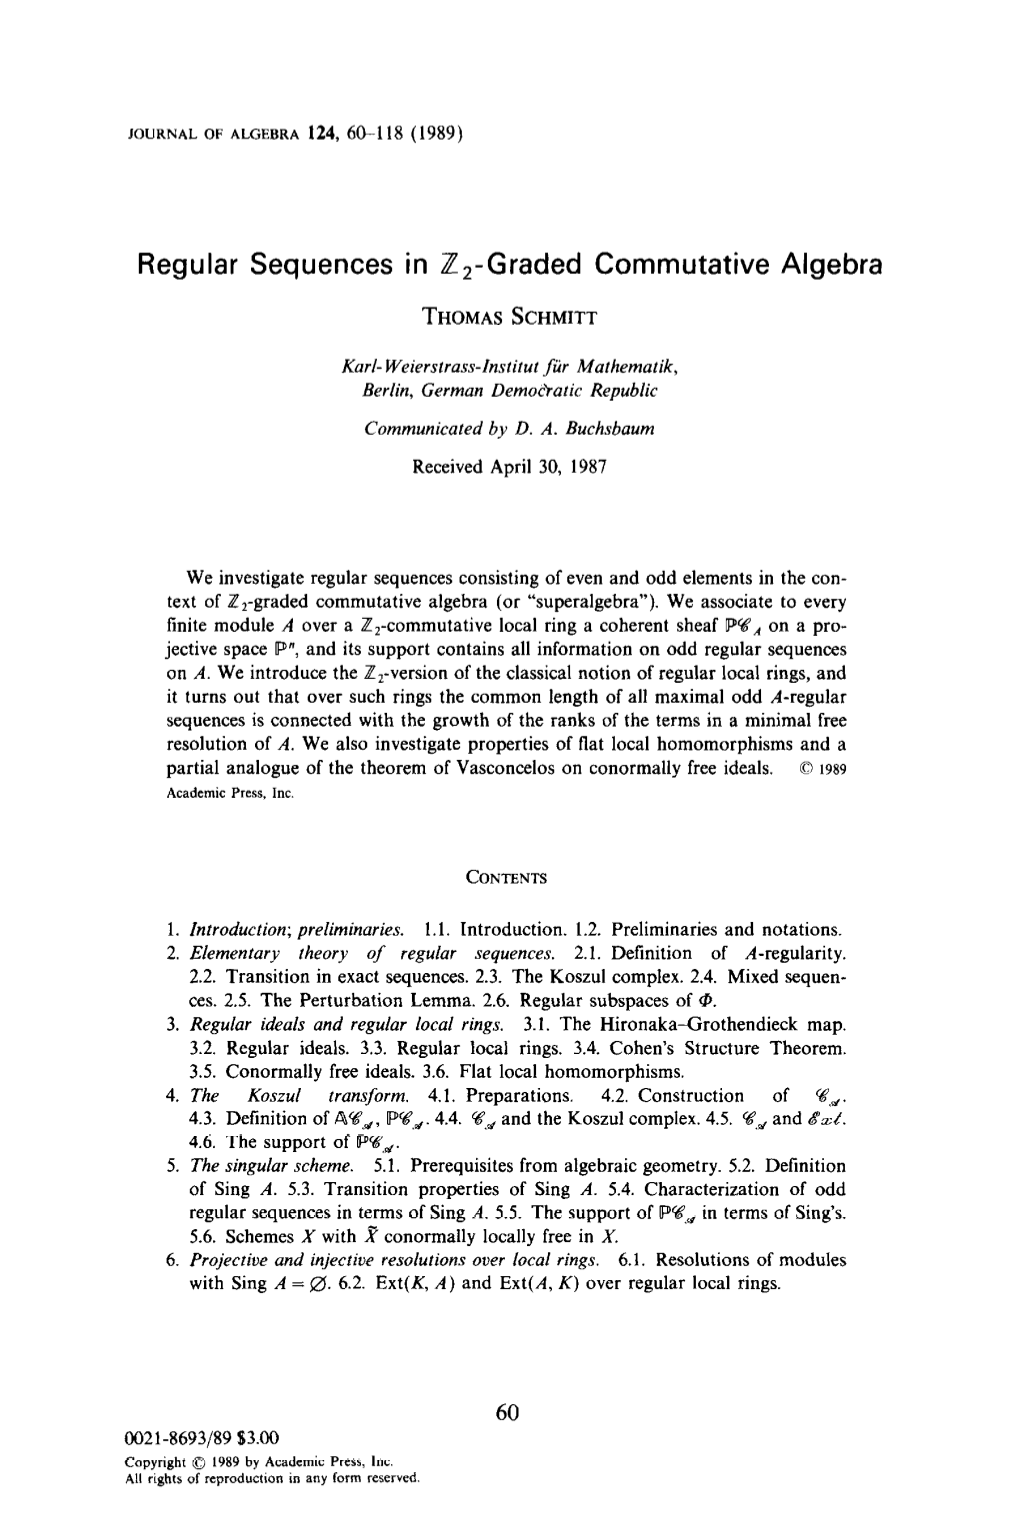 Regular Sequences in &-Graded Commutative Algebra